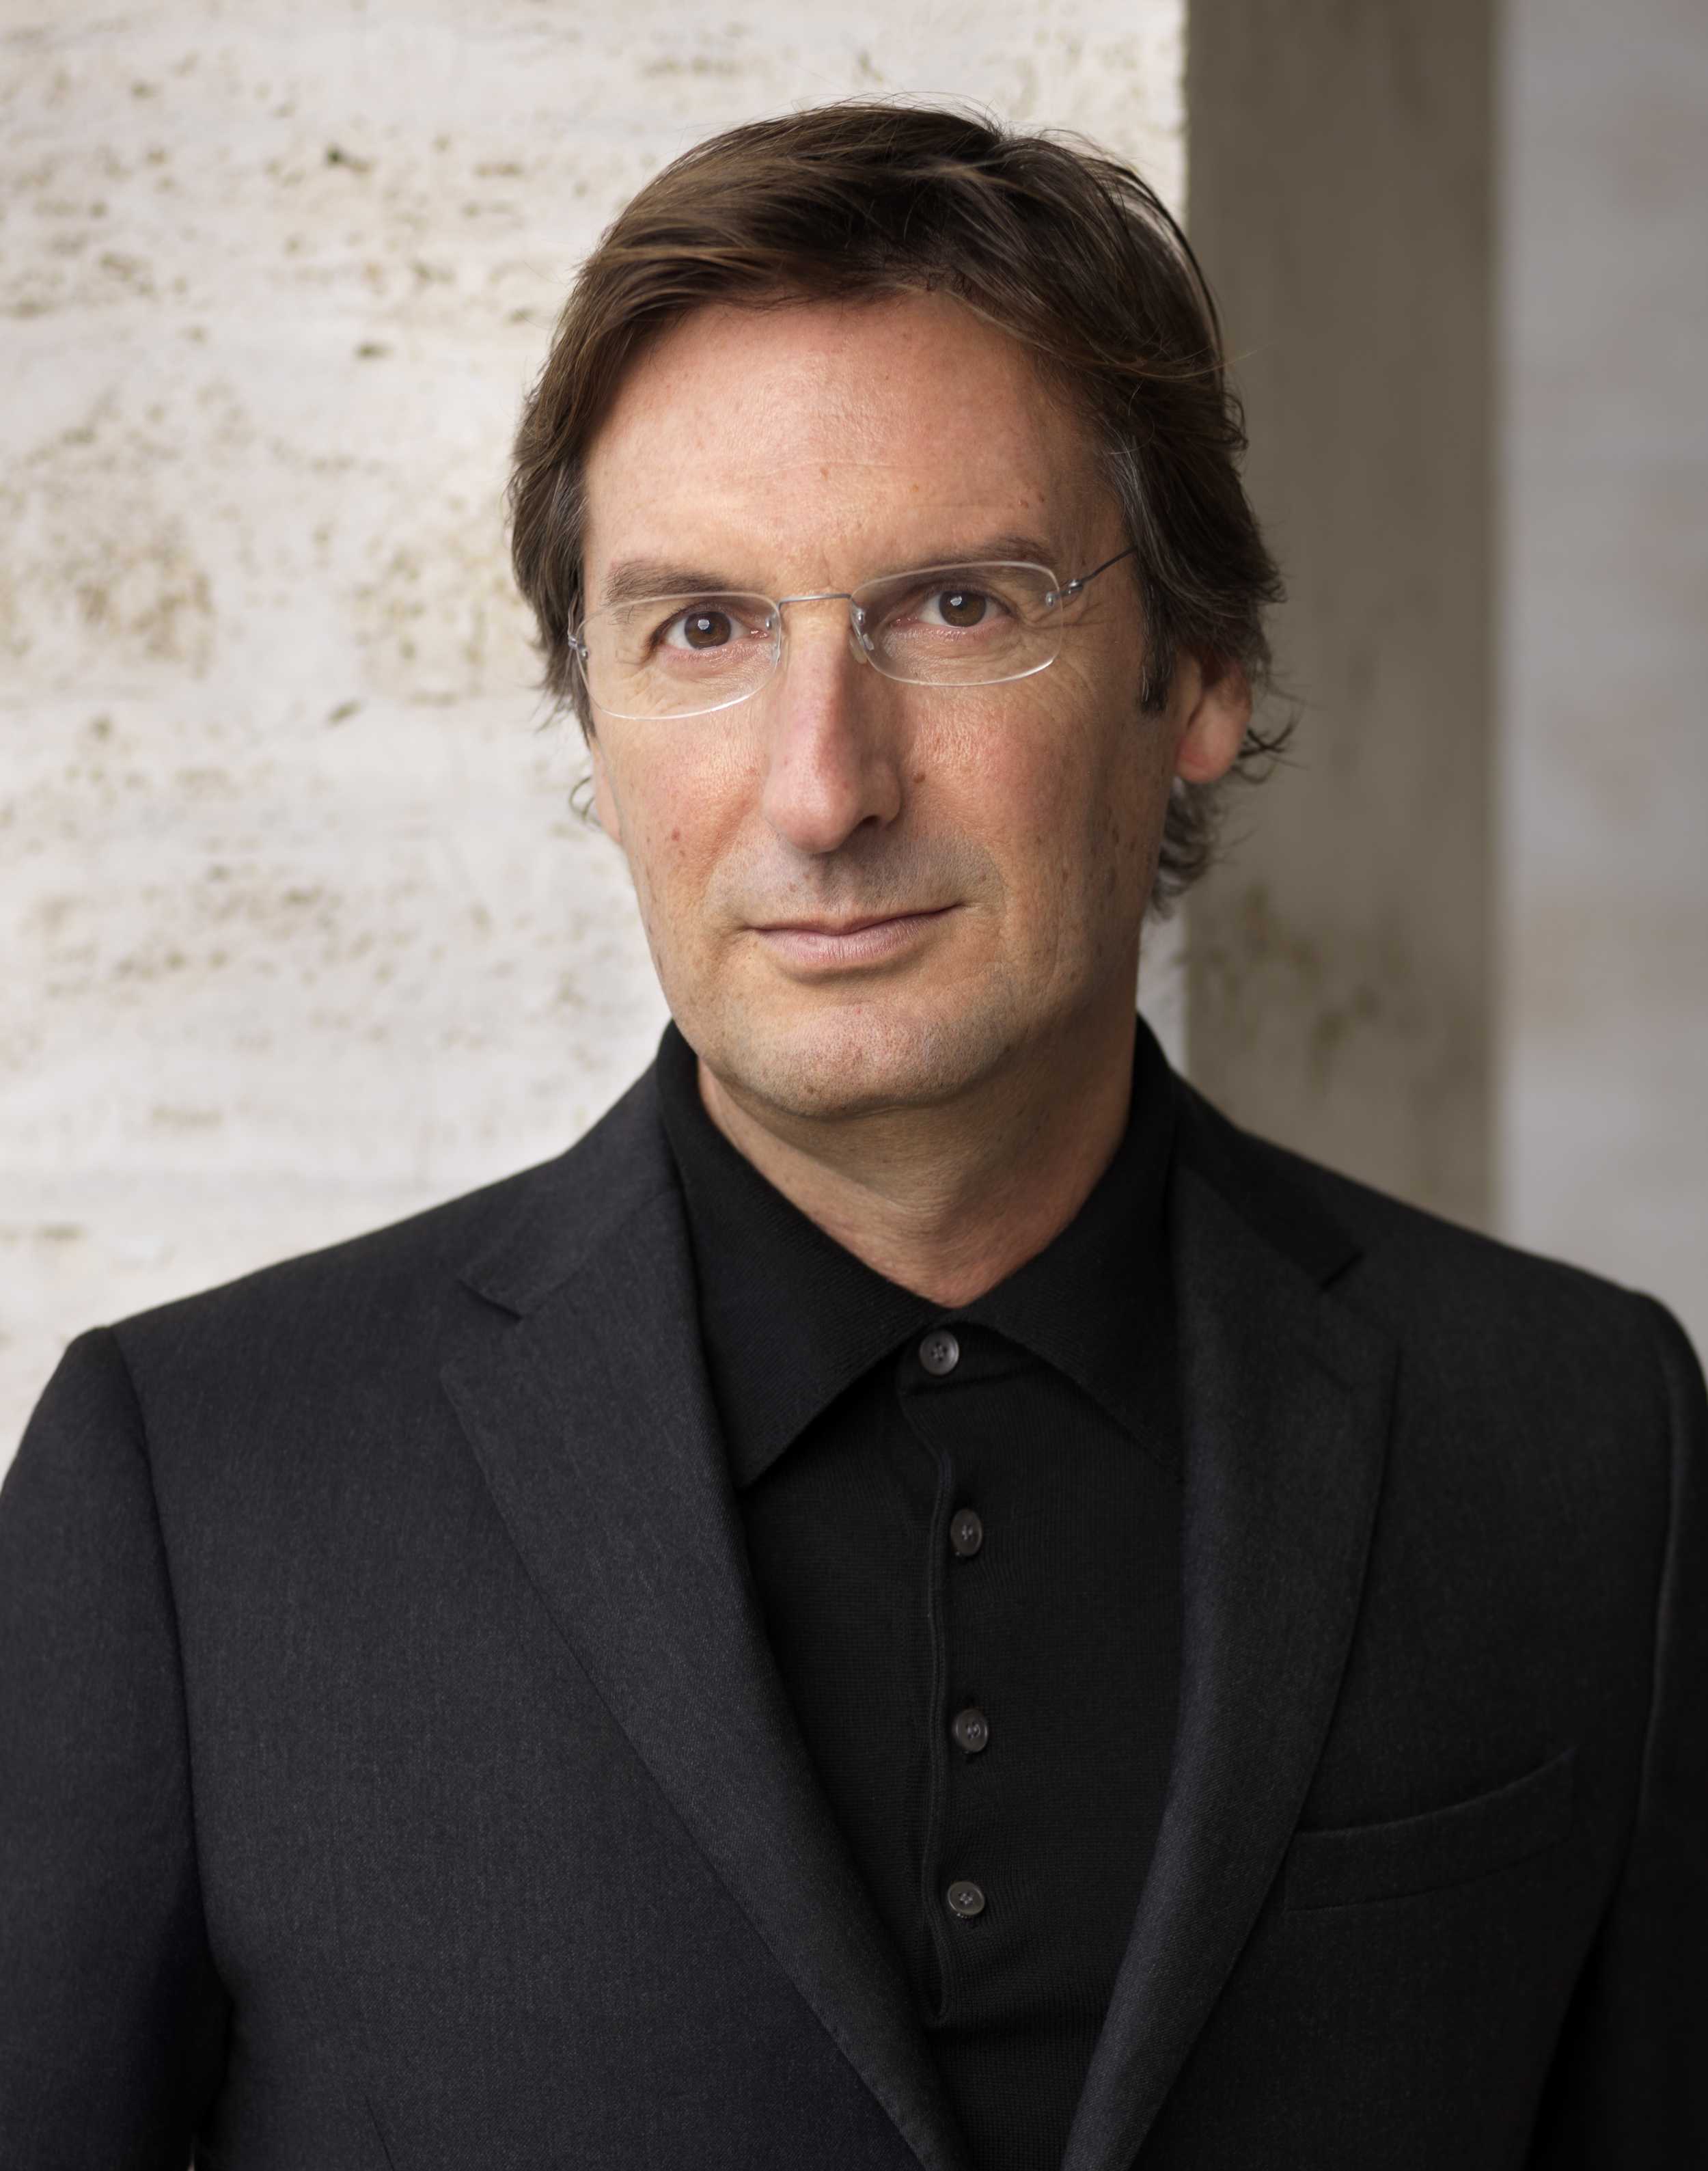 Watch Leaders with Lacqua: Pietro Beccari, Christian Dior Chairman & CEO -  Bloomberg